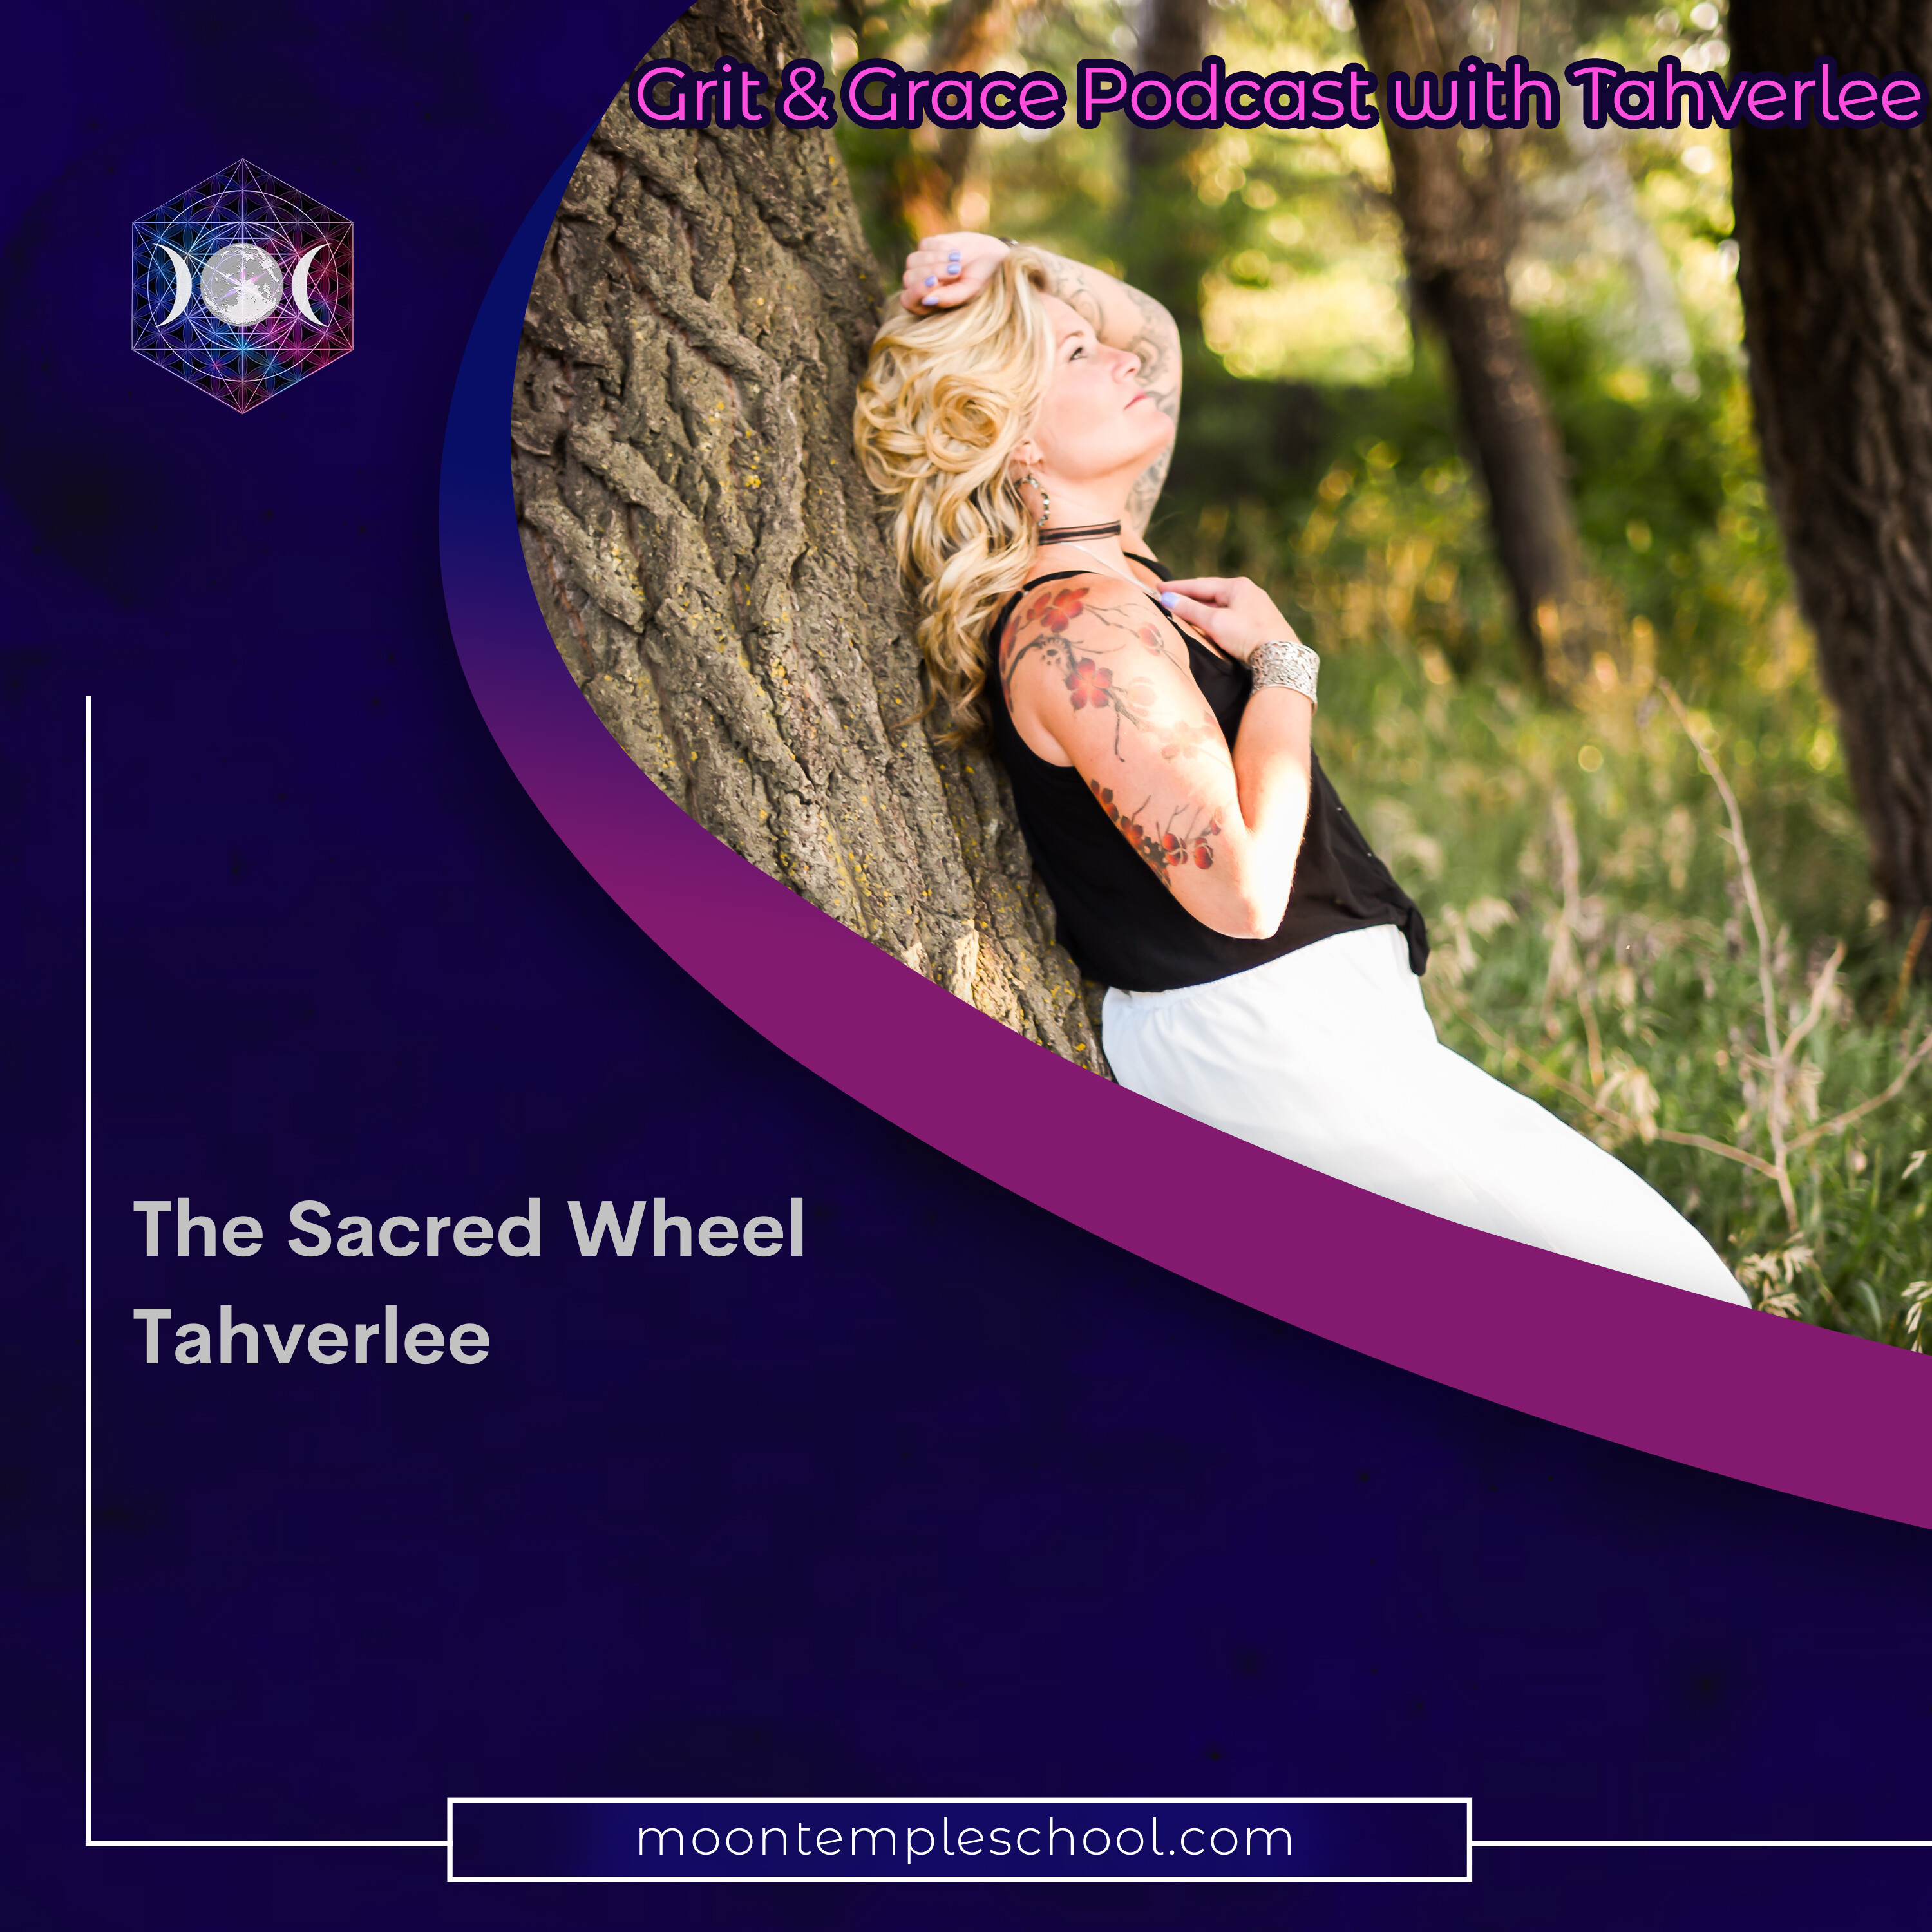 The Sacred Wheel